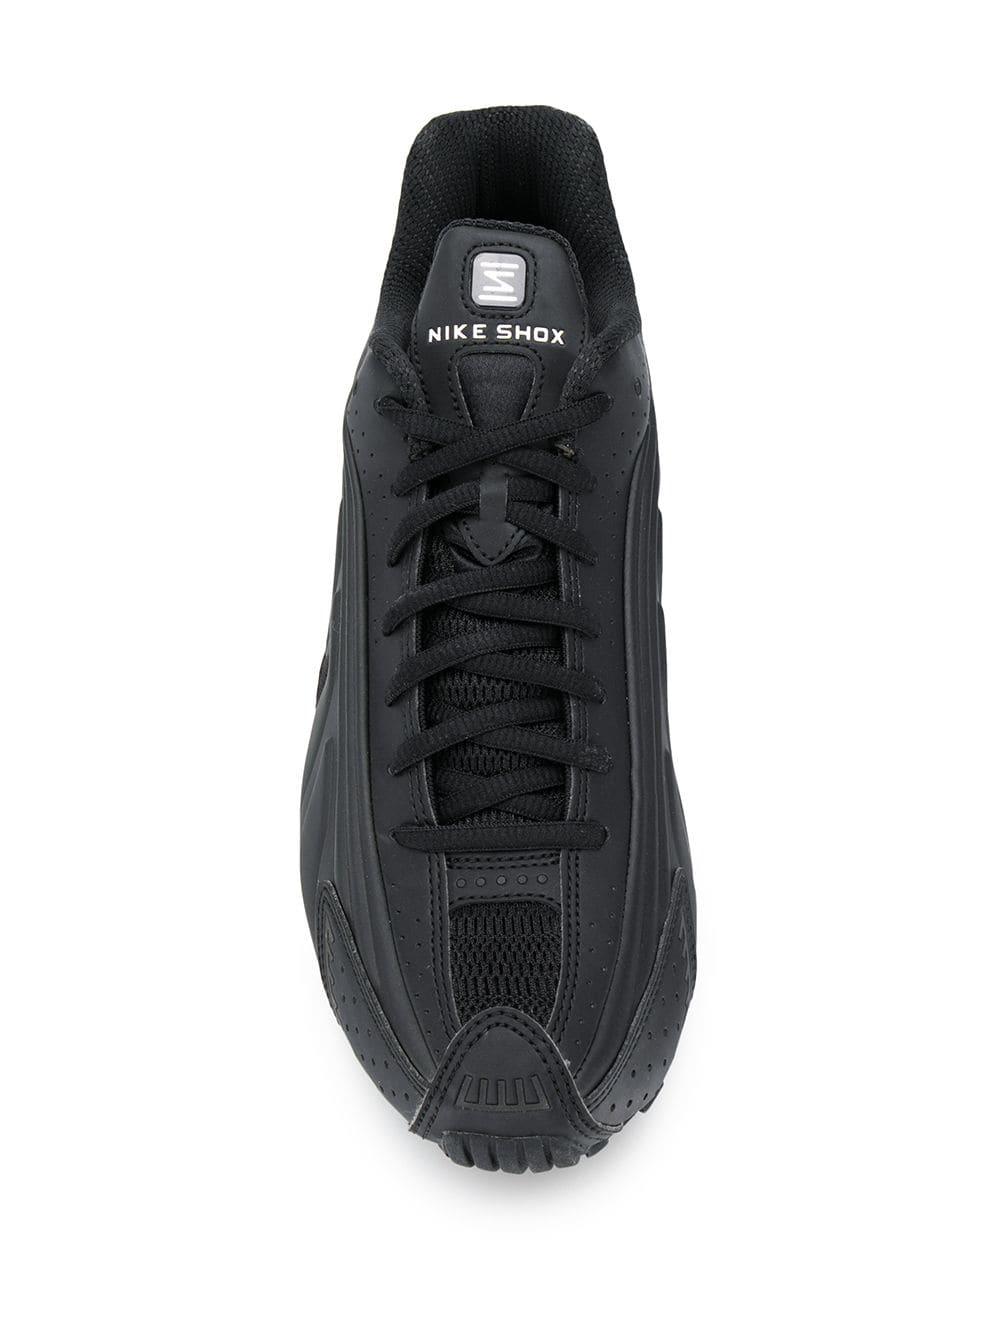 Nike Synthetic Shox Tl - Shoes in Black/Black/Orange (Black) for Men - Save  46% | Lyst